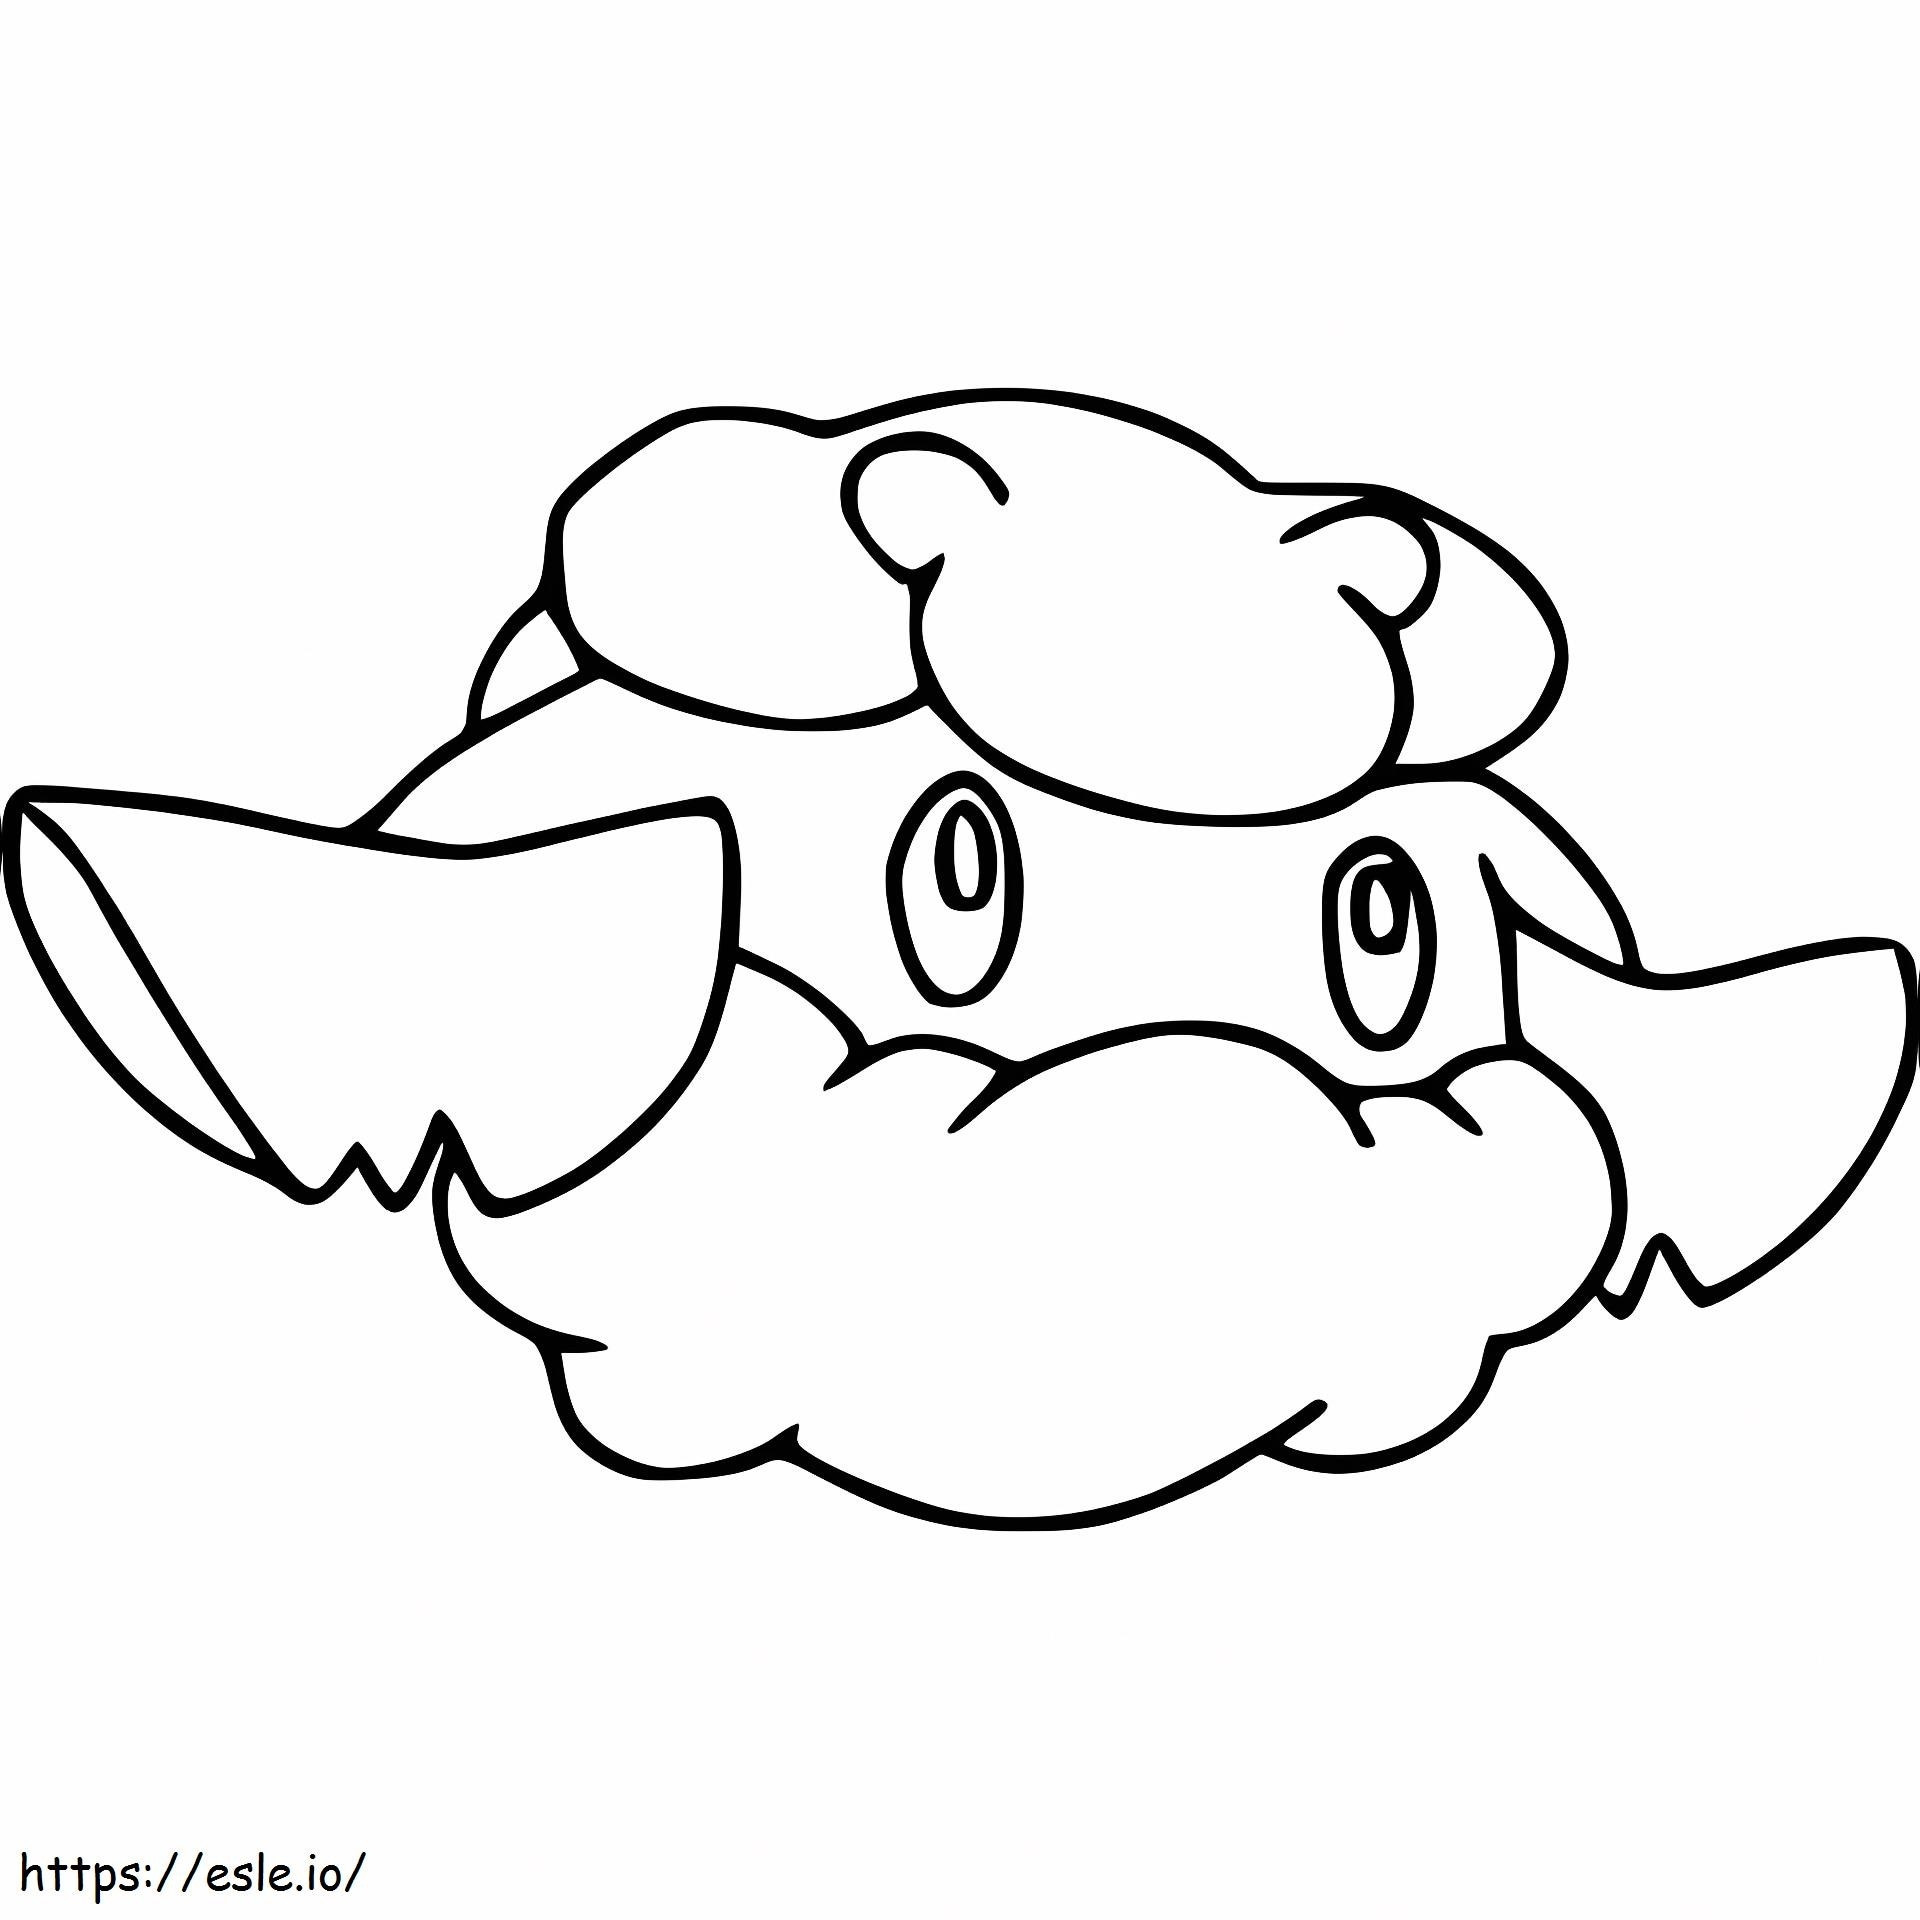 Cottonee-Pokémon ausmalbilder